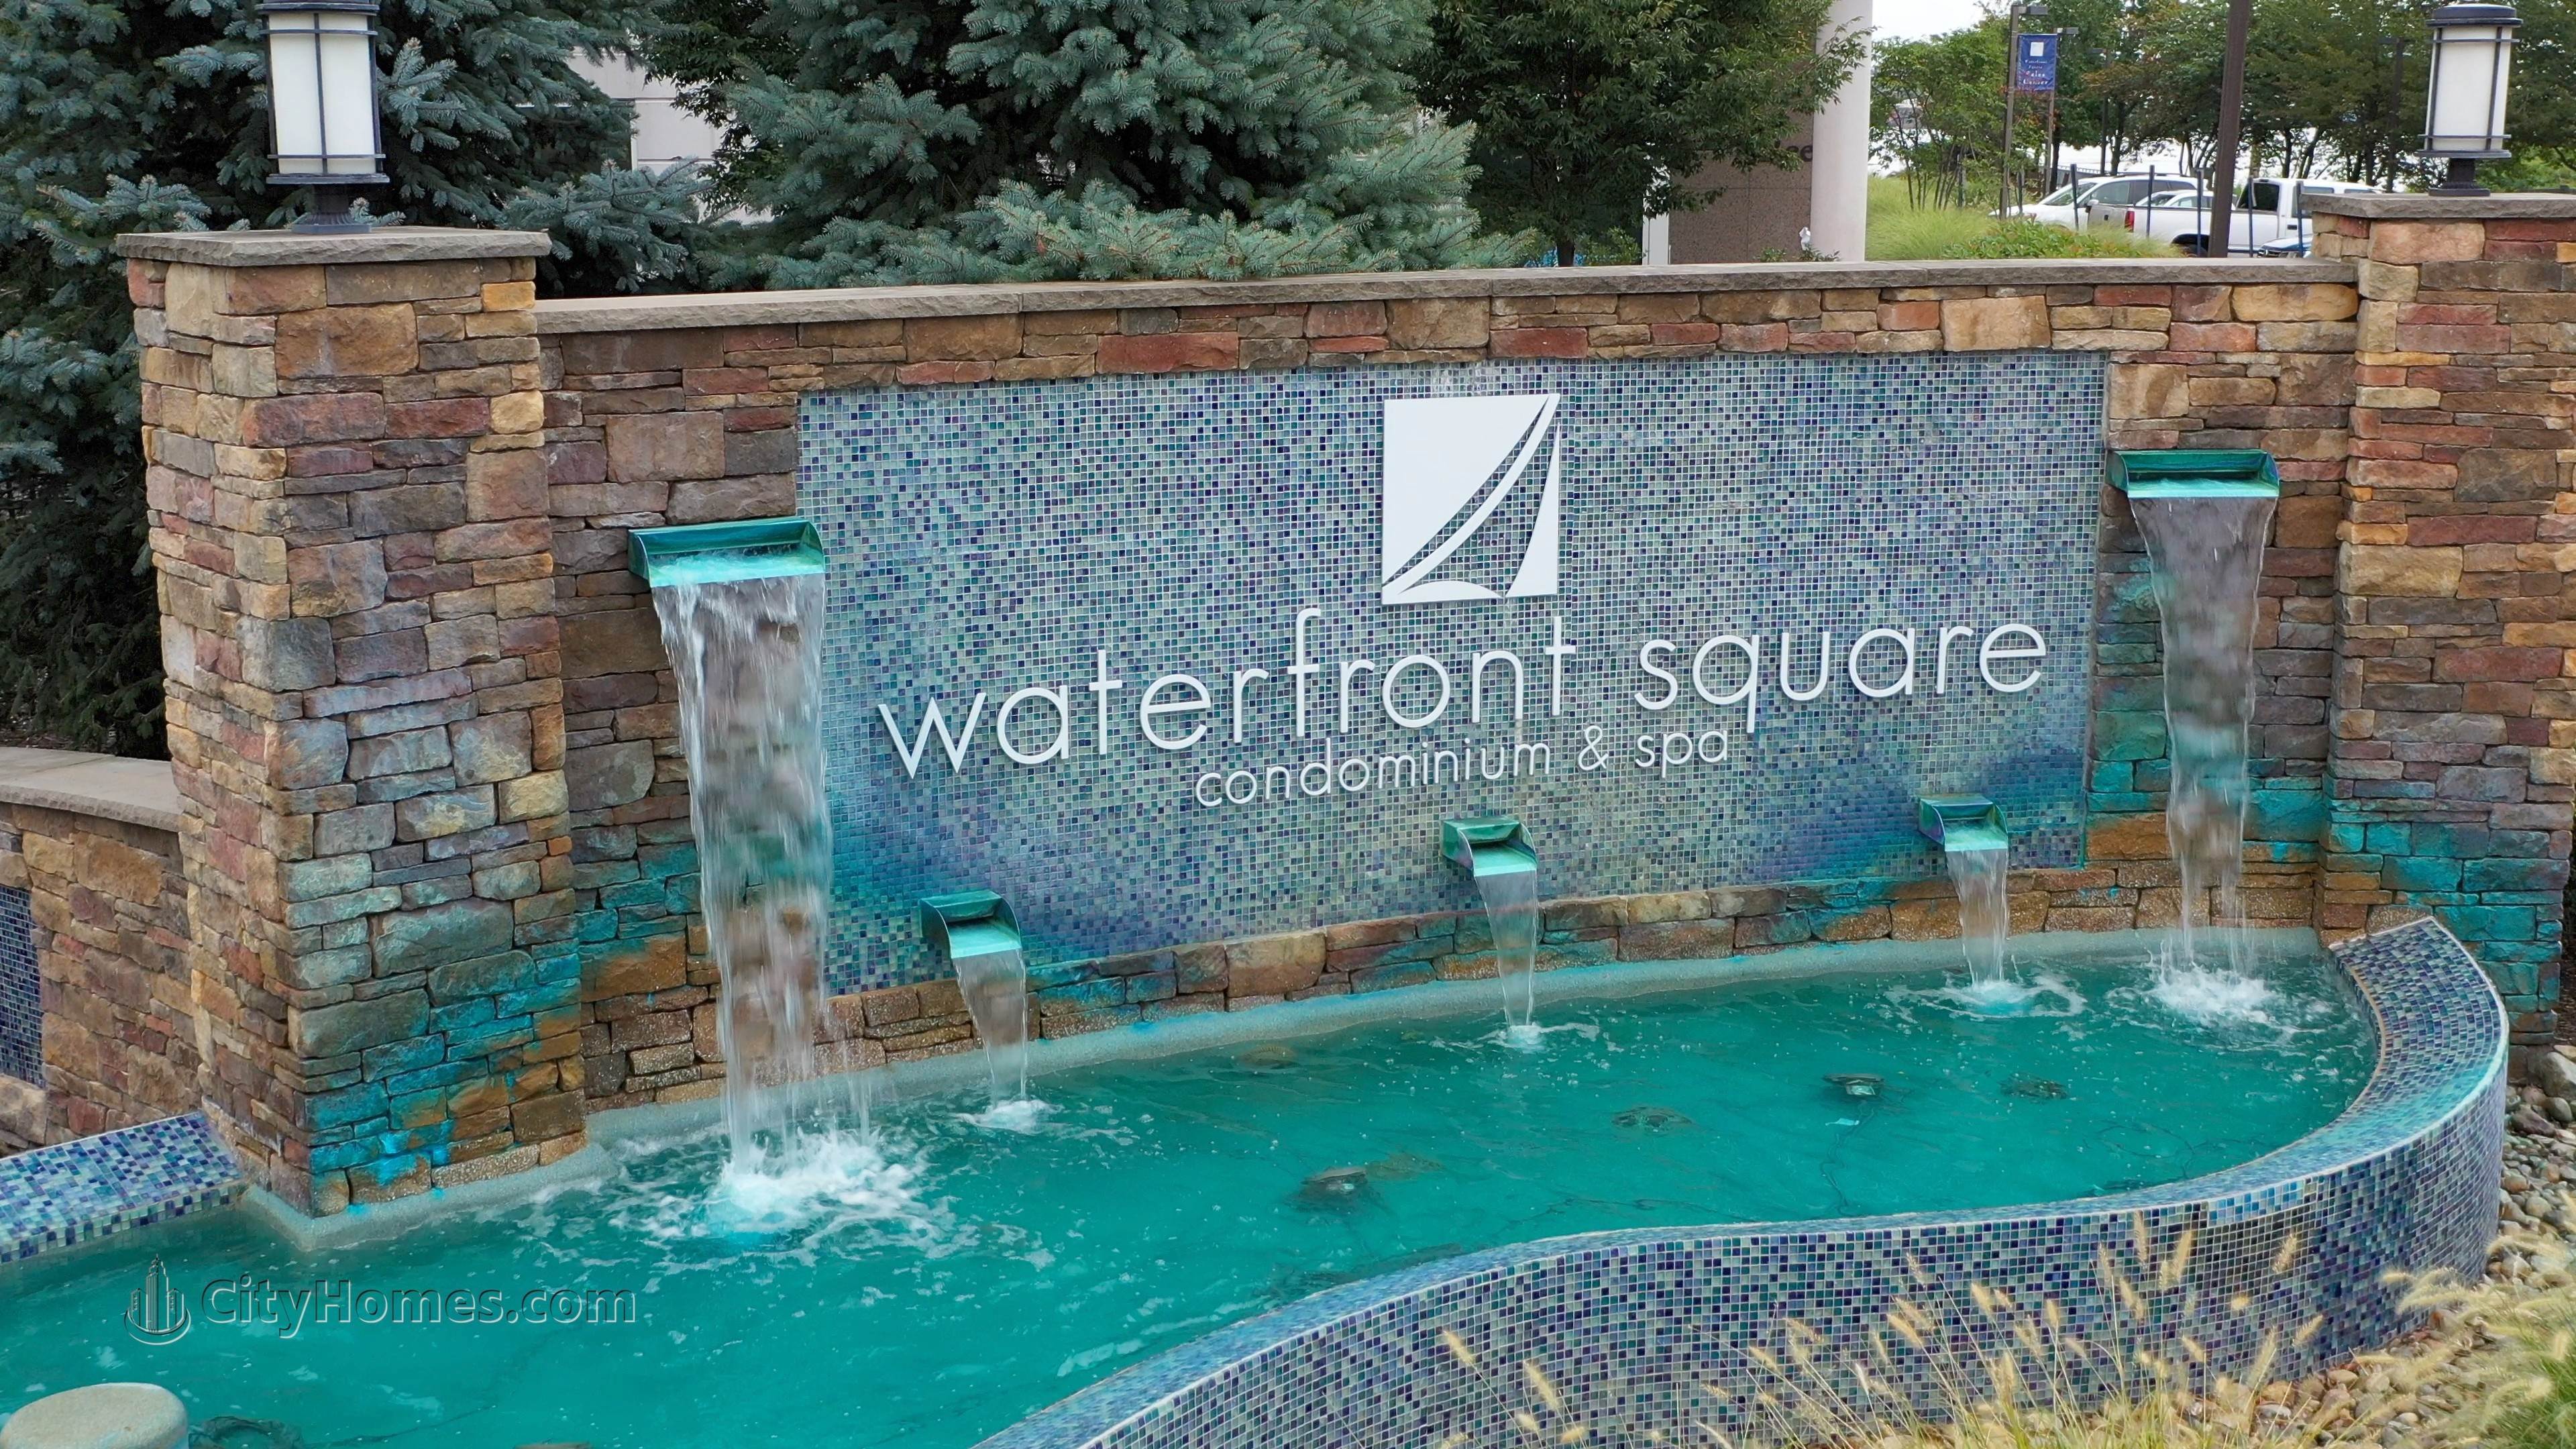 Waterfront Square建於 901 N Penn St, Northern Liberties, 费城, PA 19123